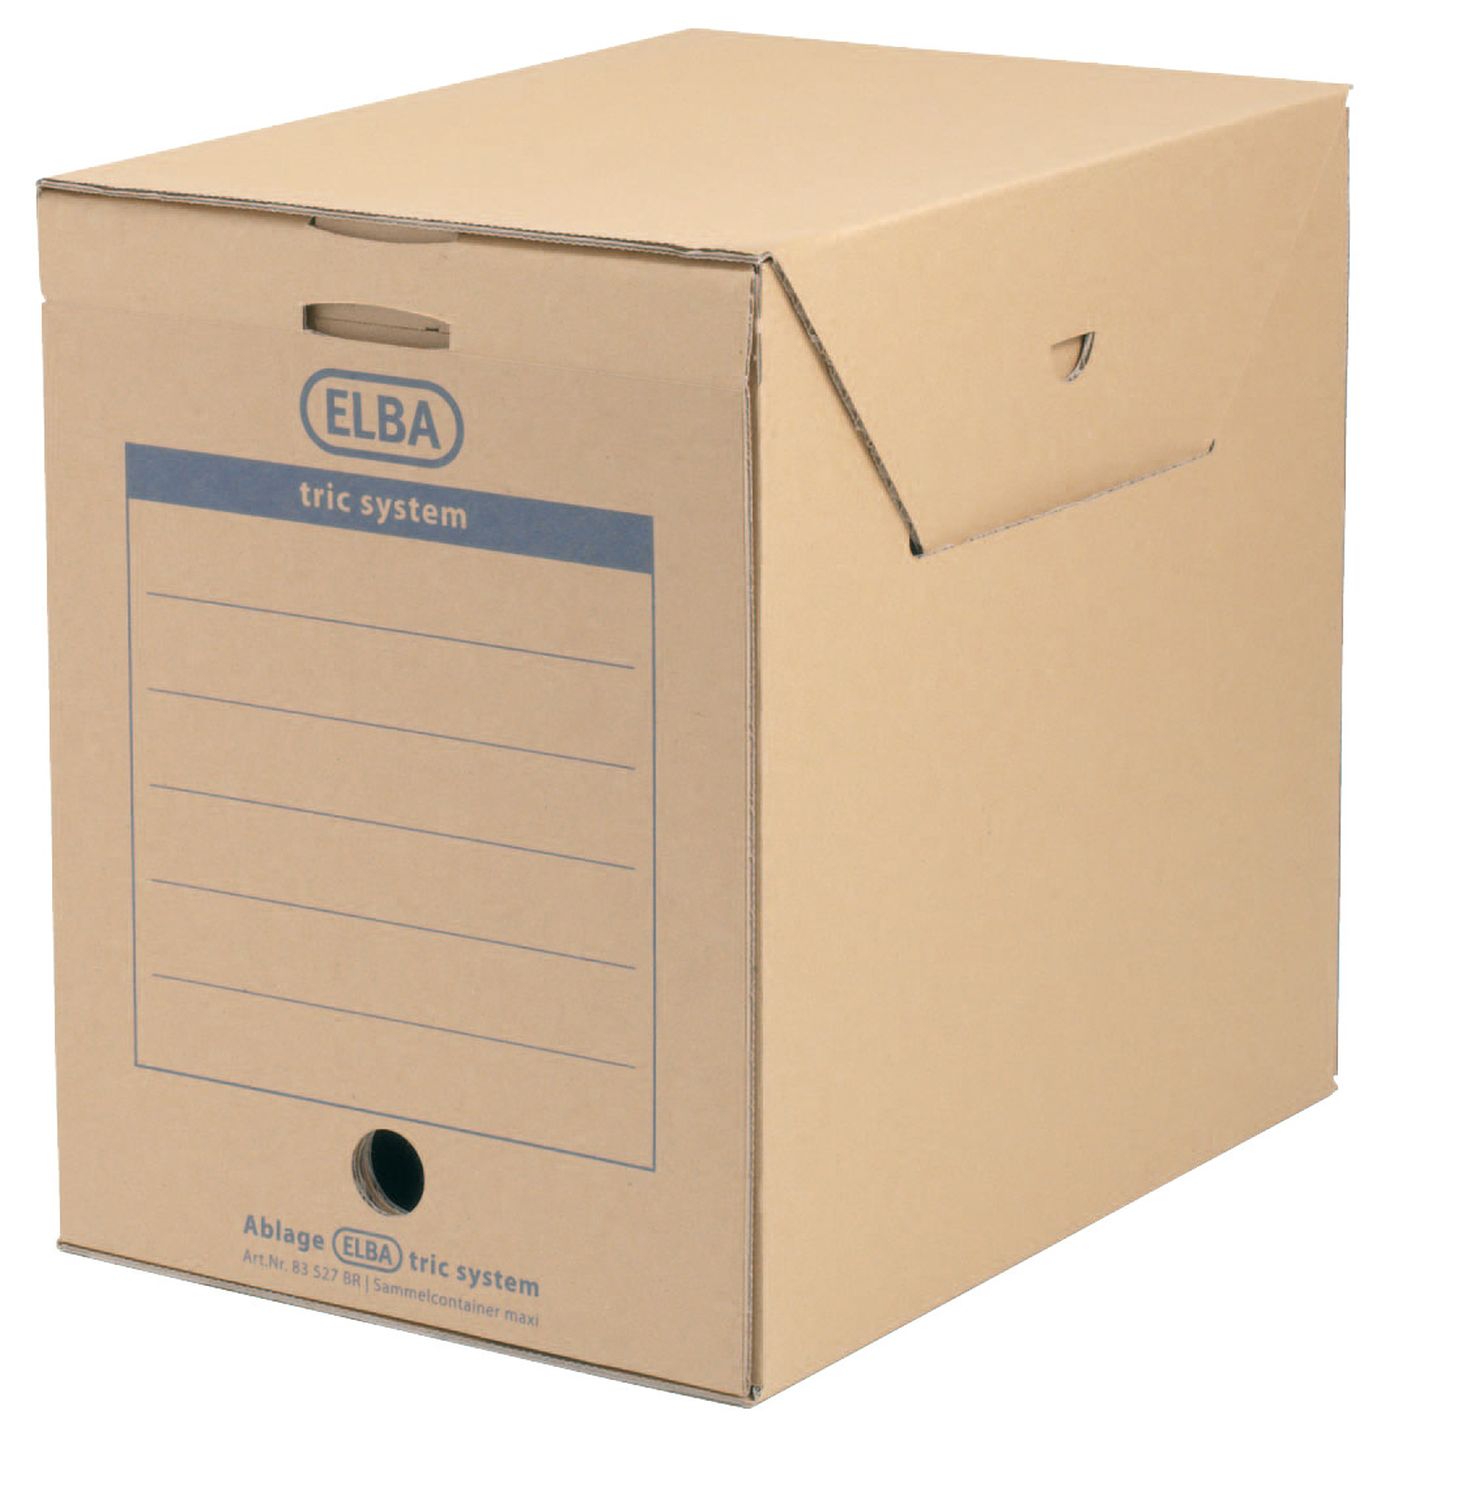 Archivcontainer tric system maxi 100421092 für Ordner, stabile Wellpappe, natur braun